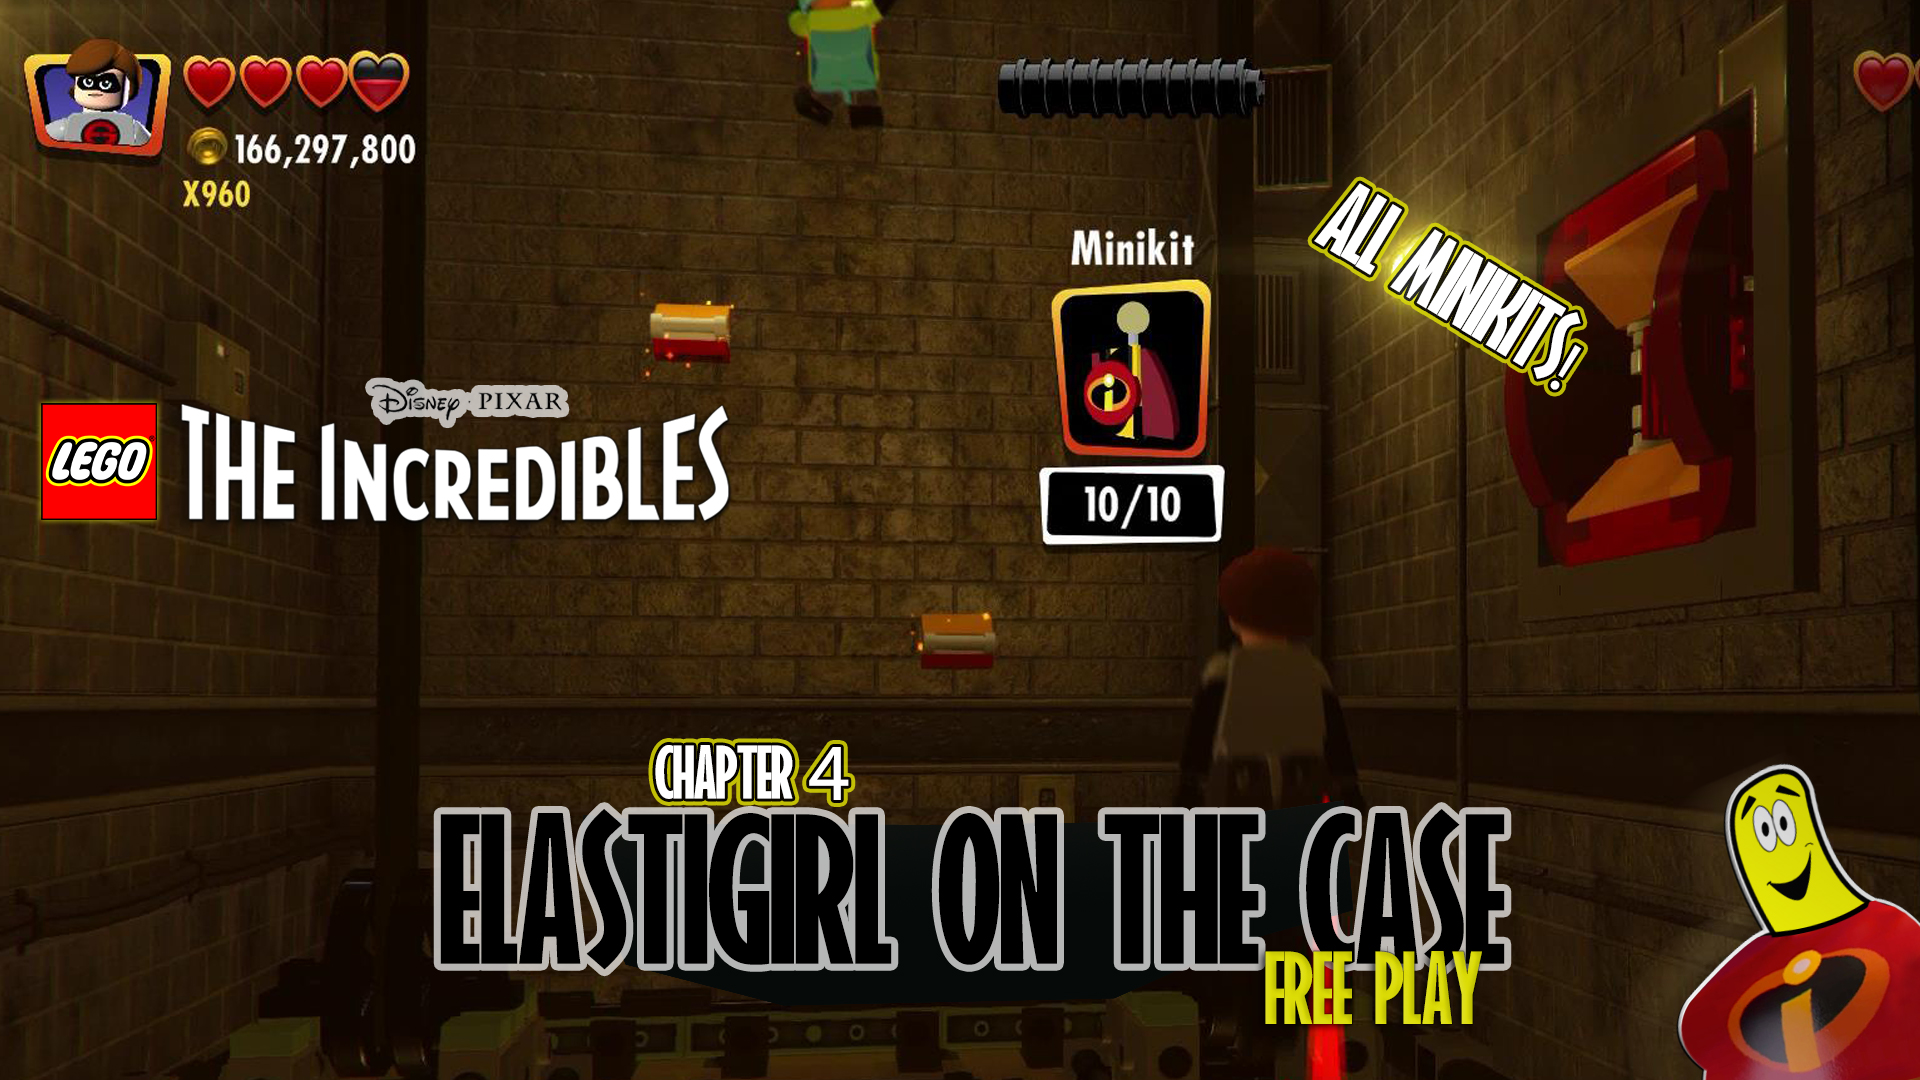 Lego The Incredibles: Elastigirl On The Case FREE PLAY (All 10 Minikits) – HTG